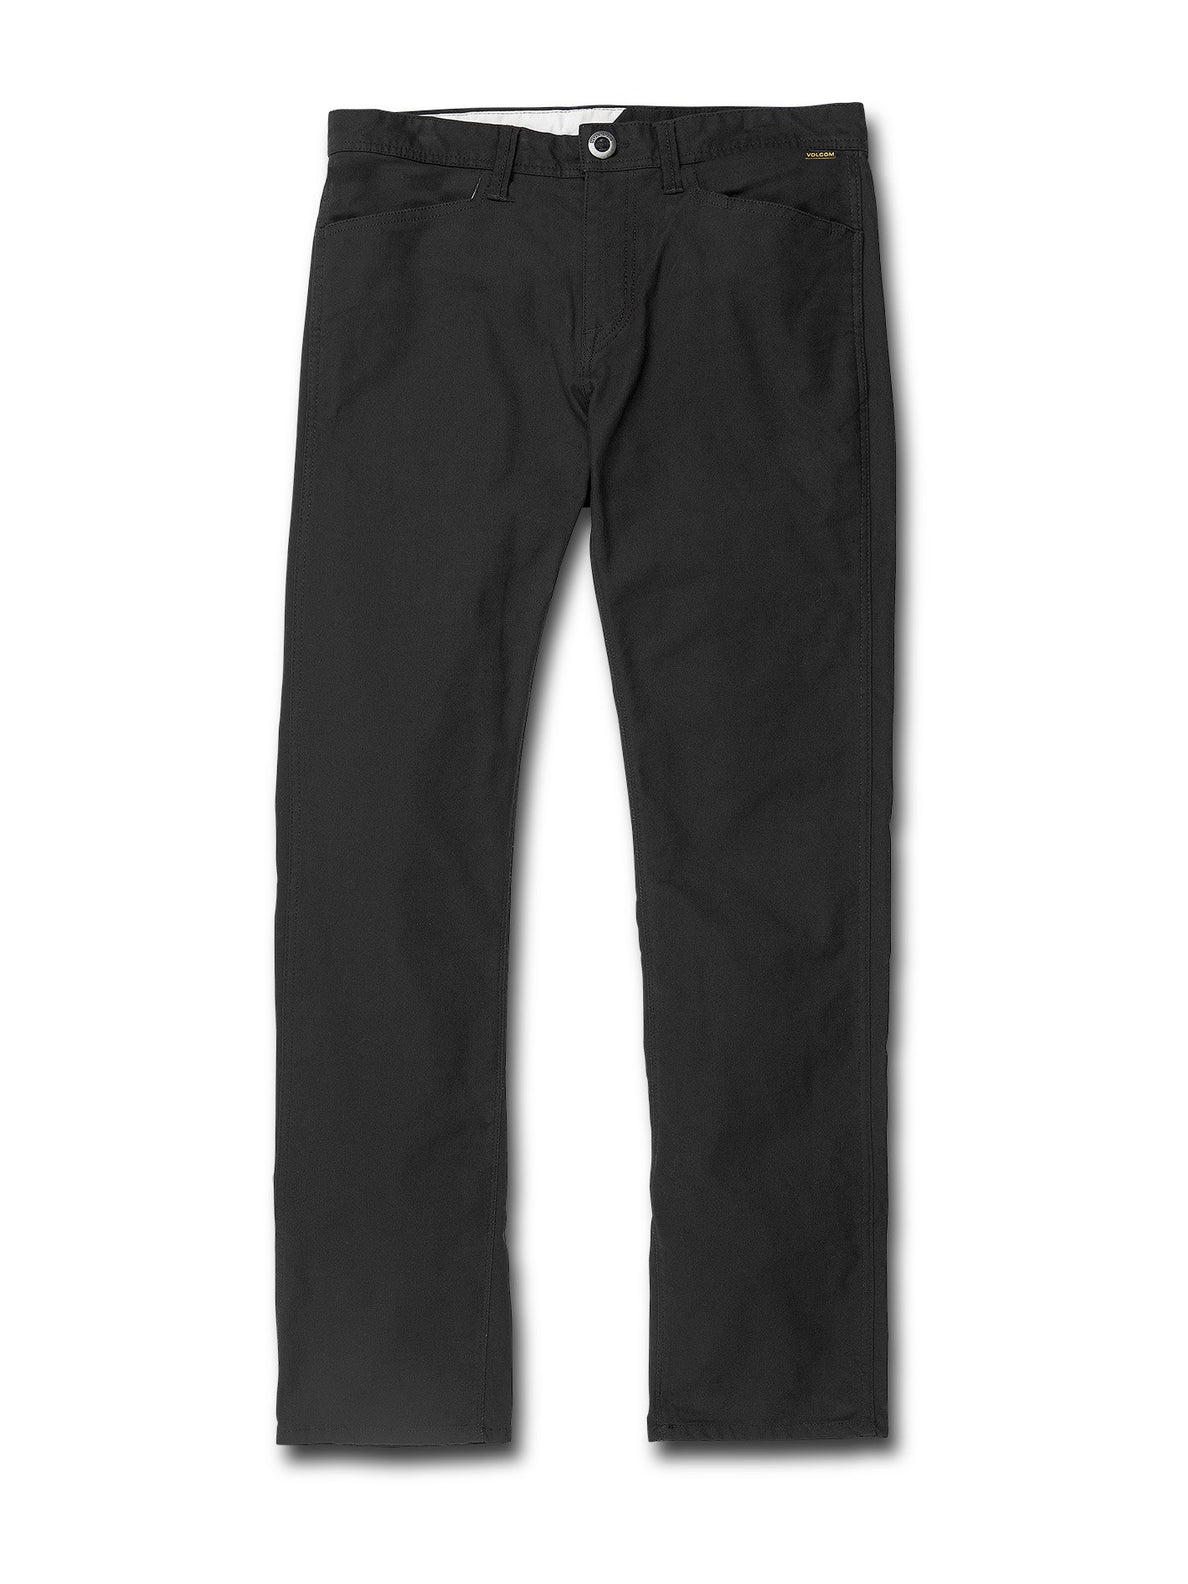 Vsm Gritter Modern Pant - Black (A1131906_BLK) [F]?id=8609336033339